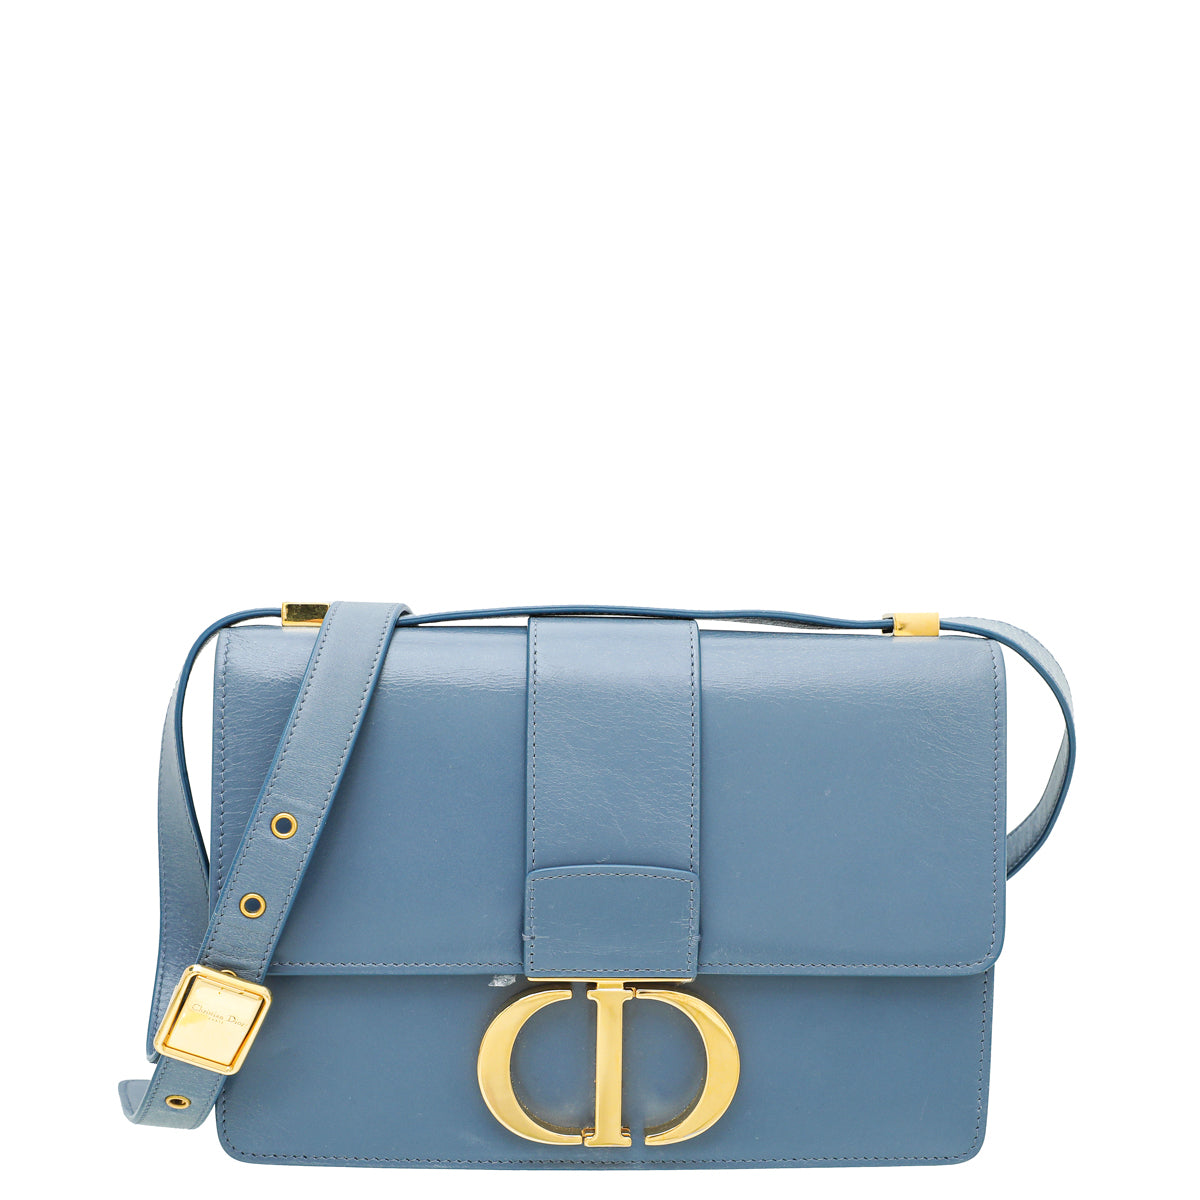 Dior 30 Montaigne Bag  Christian dior bags, Bags, Dior bag